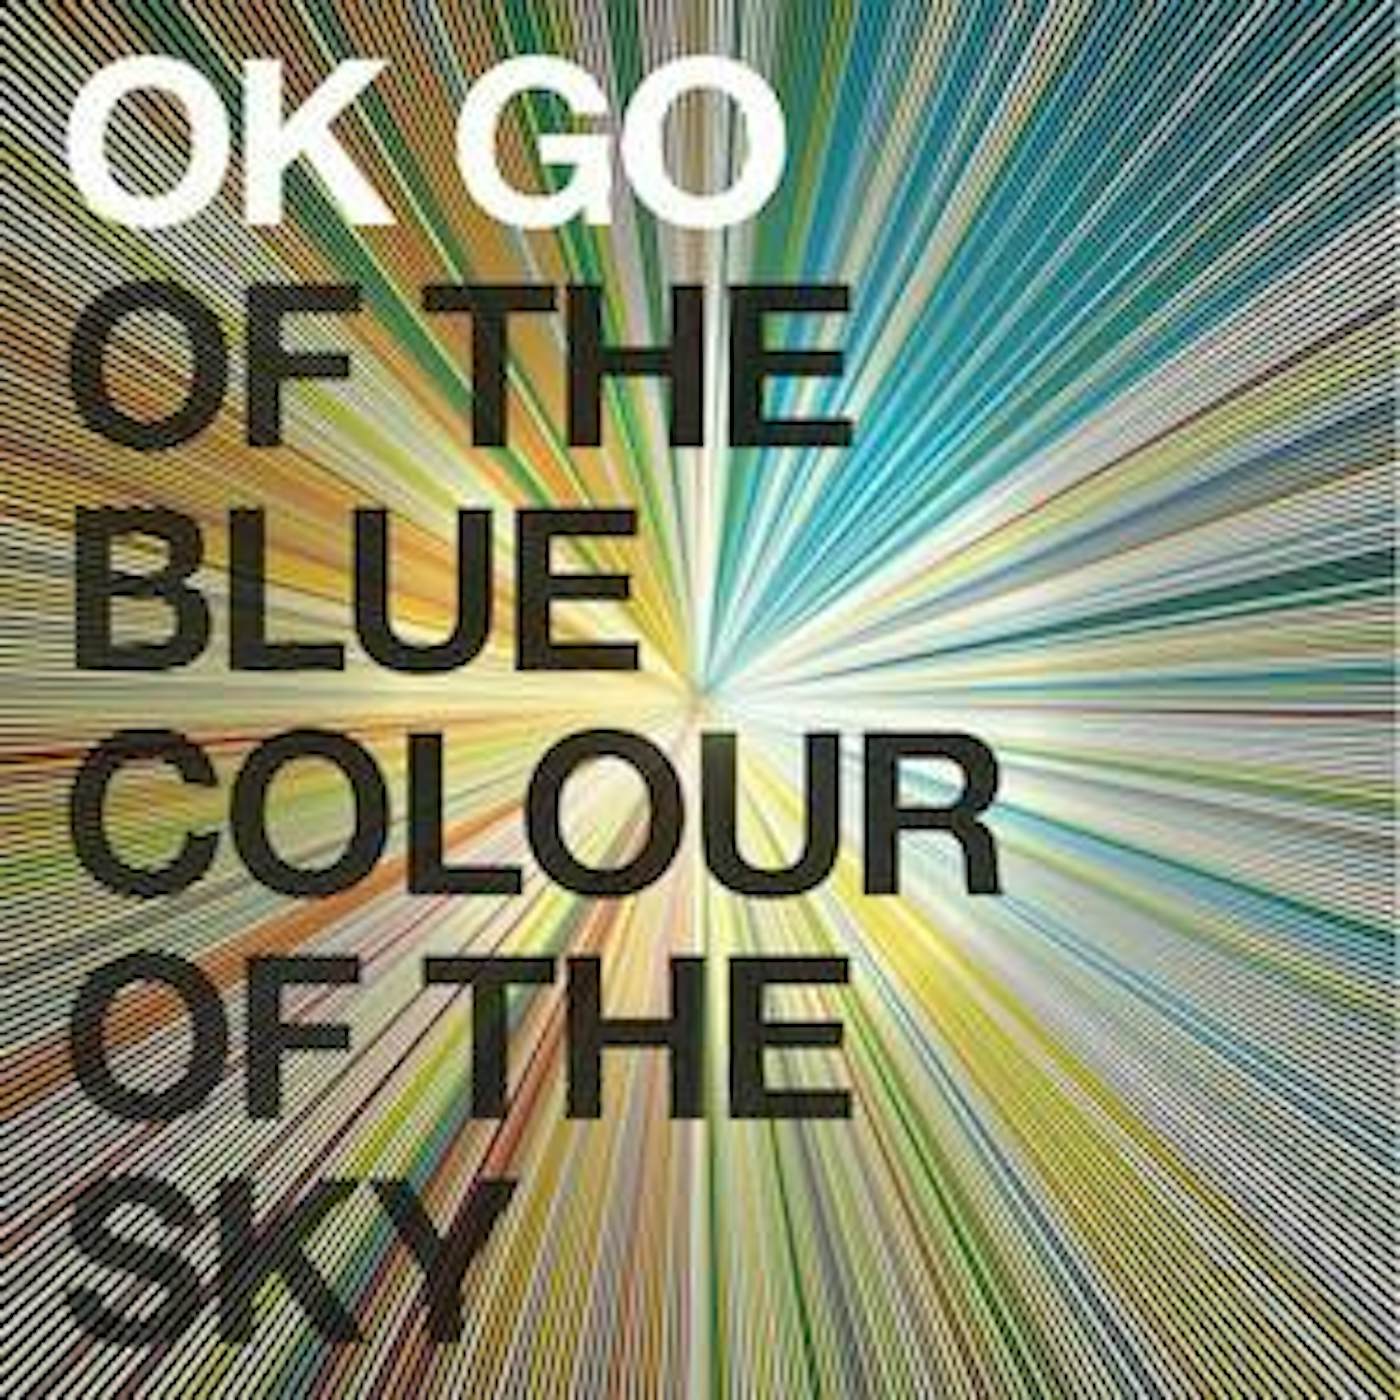 OK Go - Of The Blue Colour Of The Sky CD